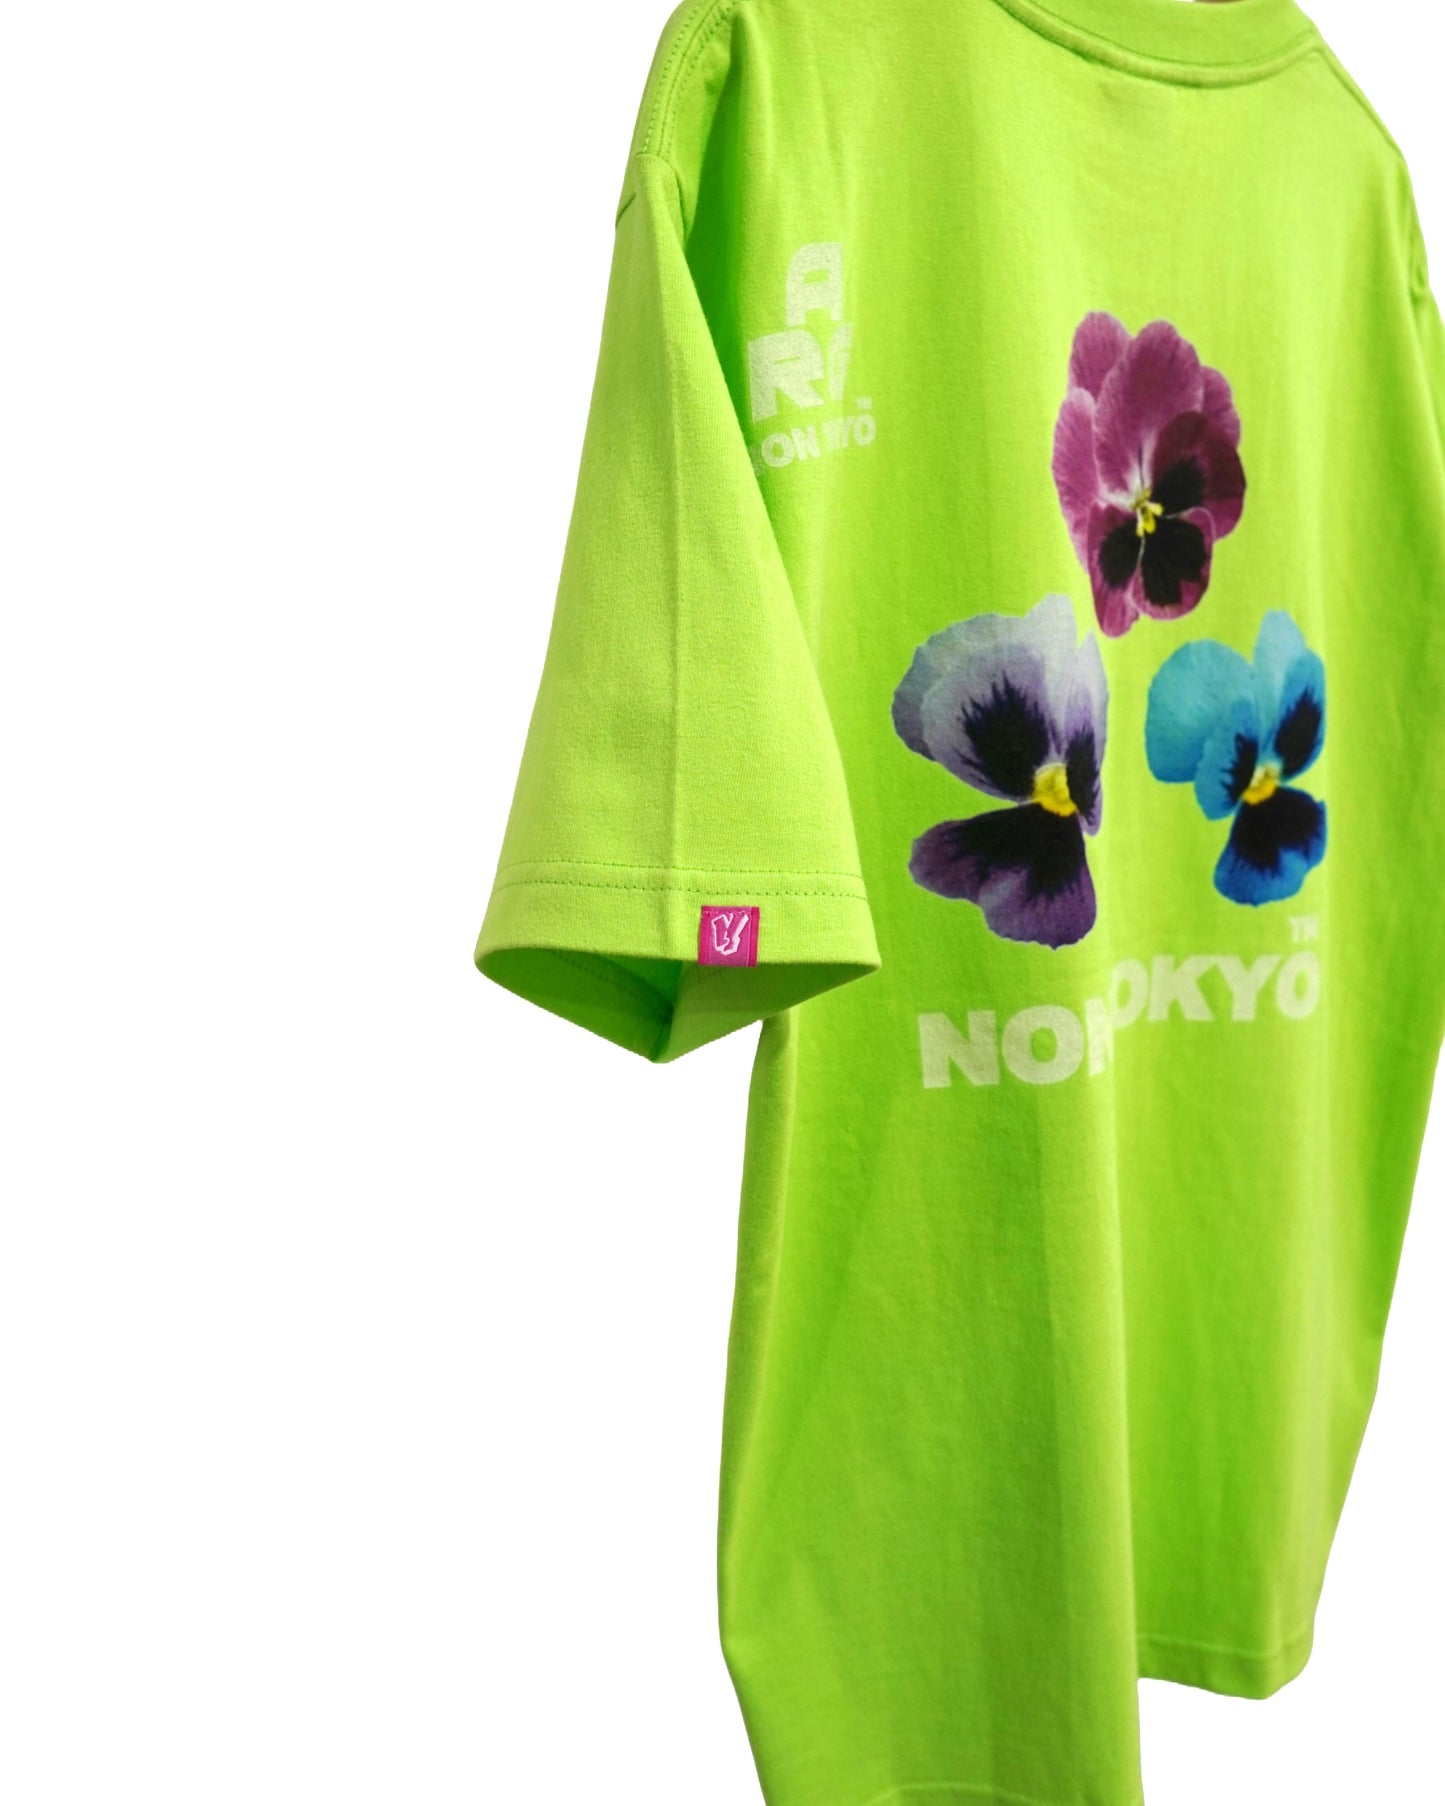 NON TOKYO /  PRINT T-SHIRT (PANSY / GREEN) / 〈ノントーキョー〉プリントTシャツ (パンジー / グリーン)